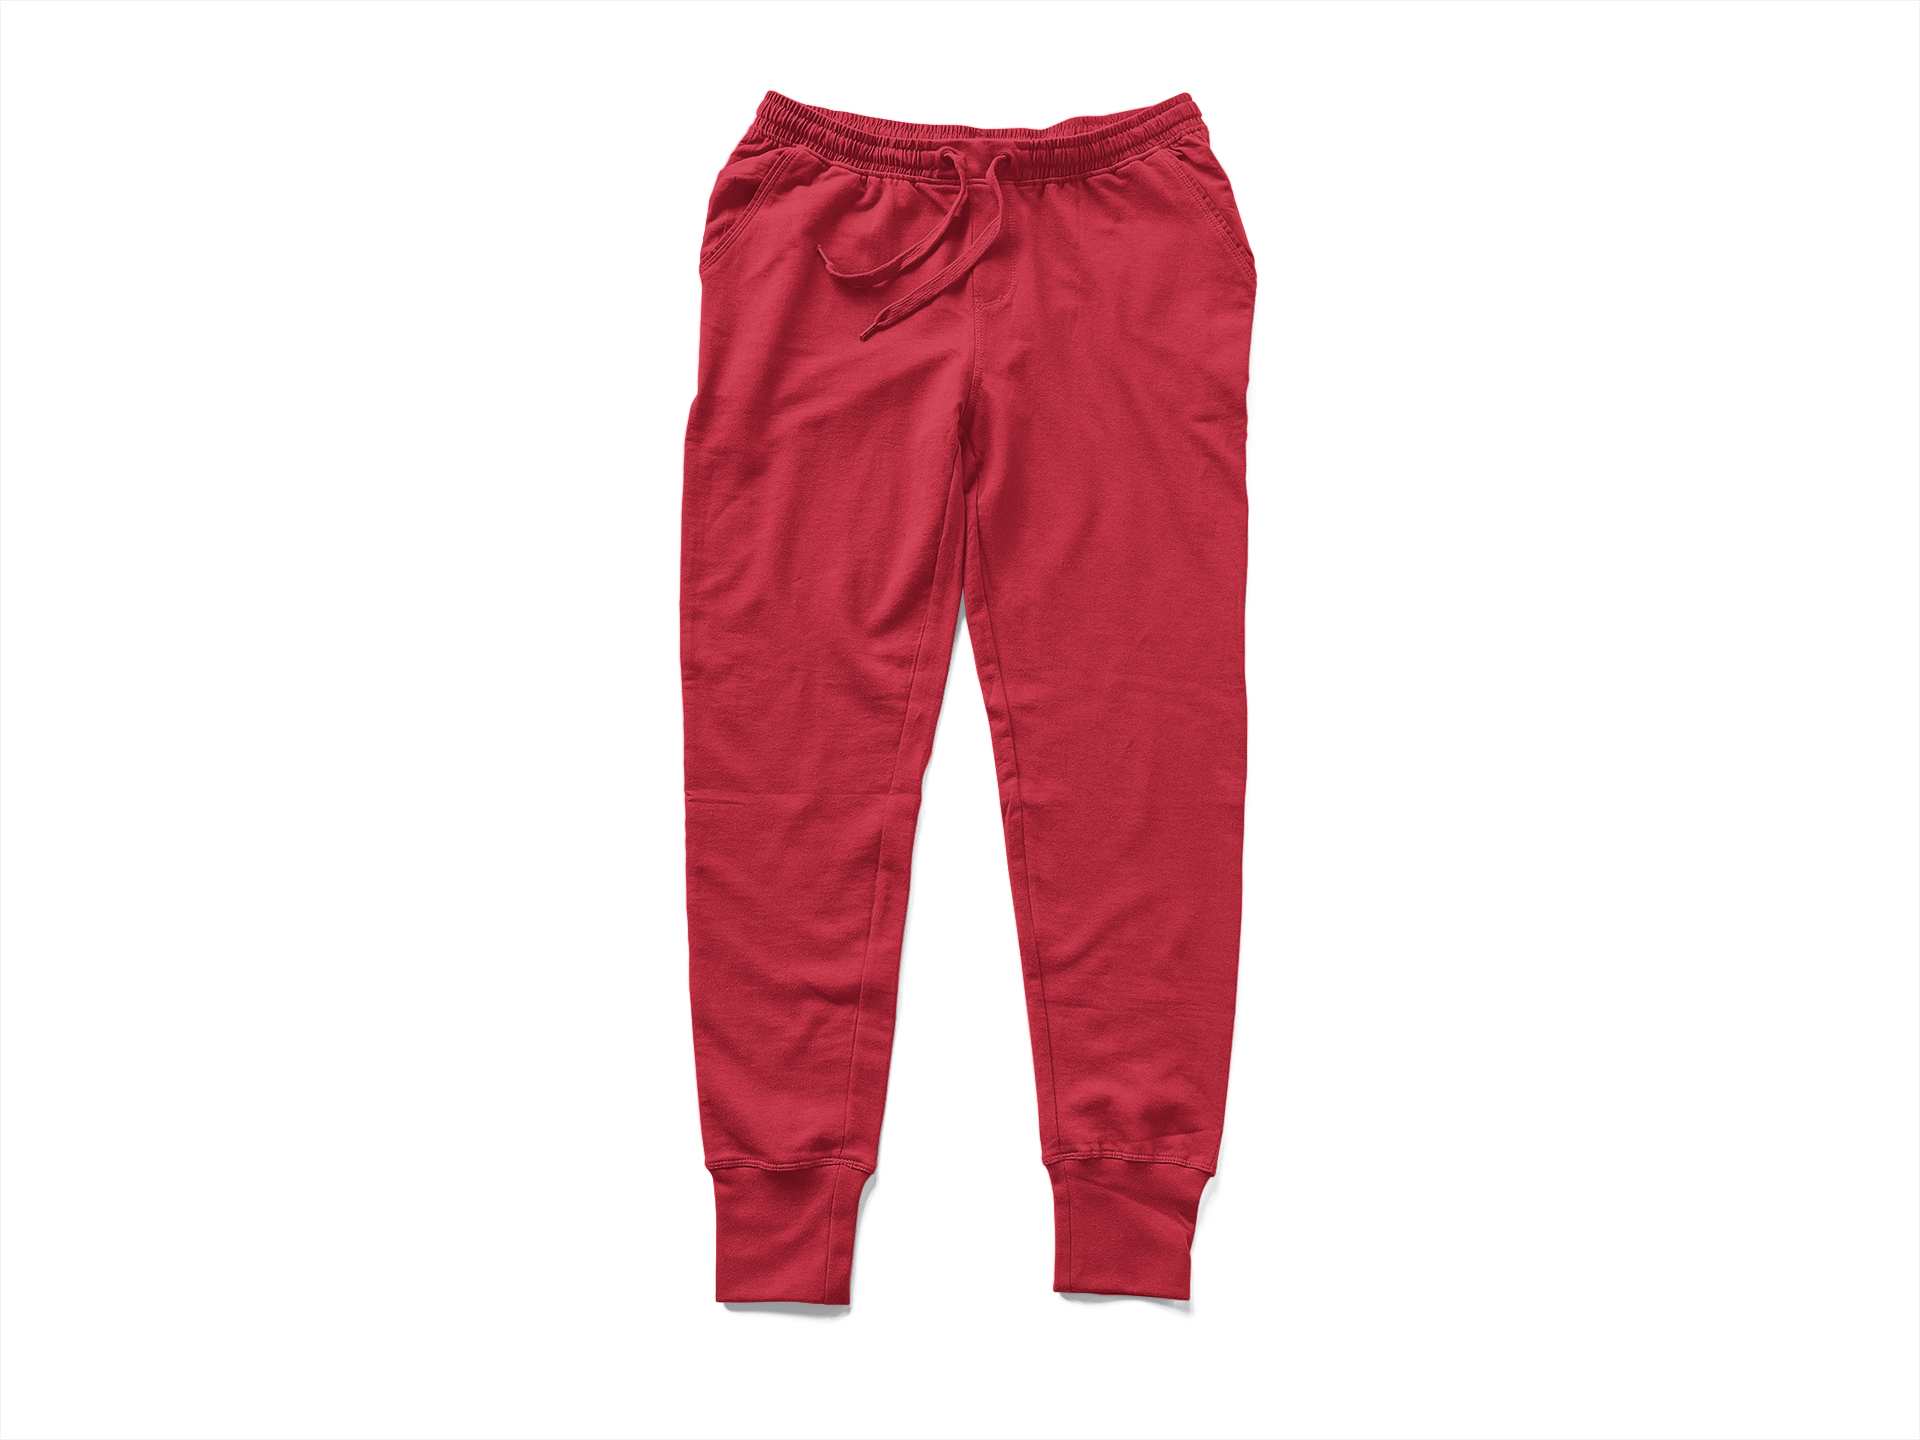 Respeckfully Worldwide Sweatsuit (Women Red) – Official Respeckfully Store